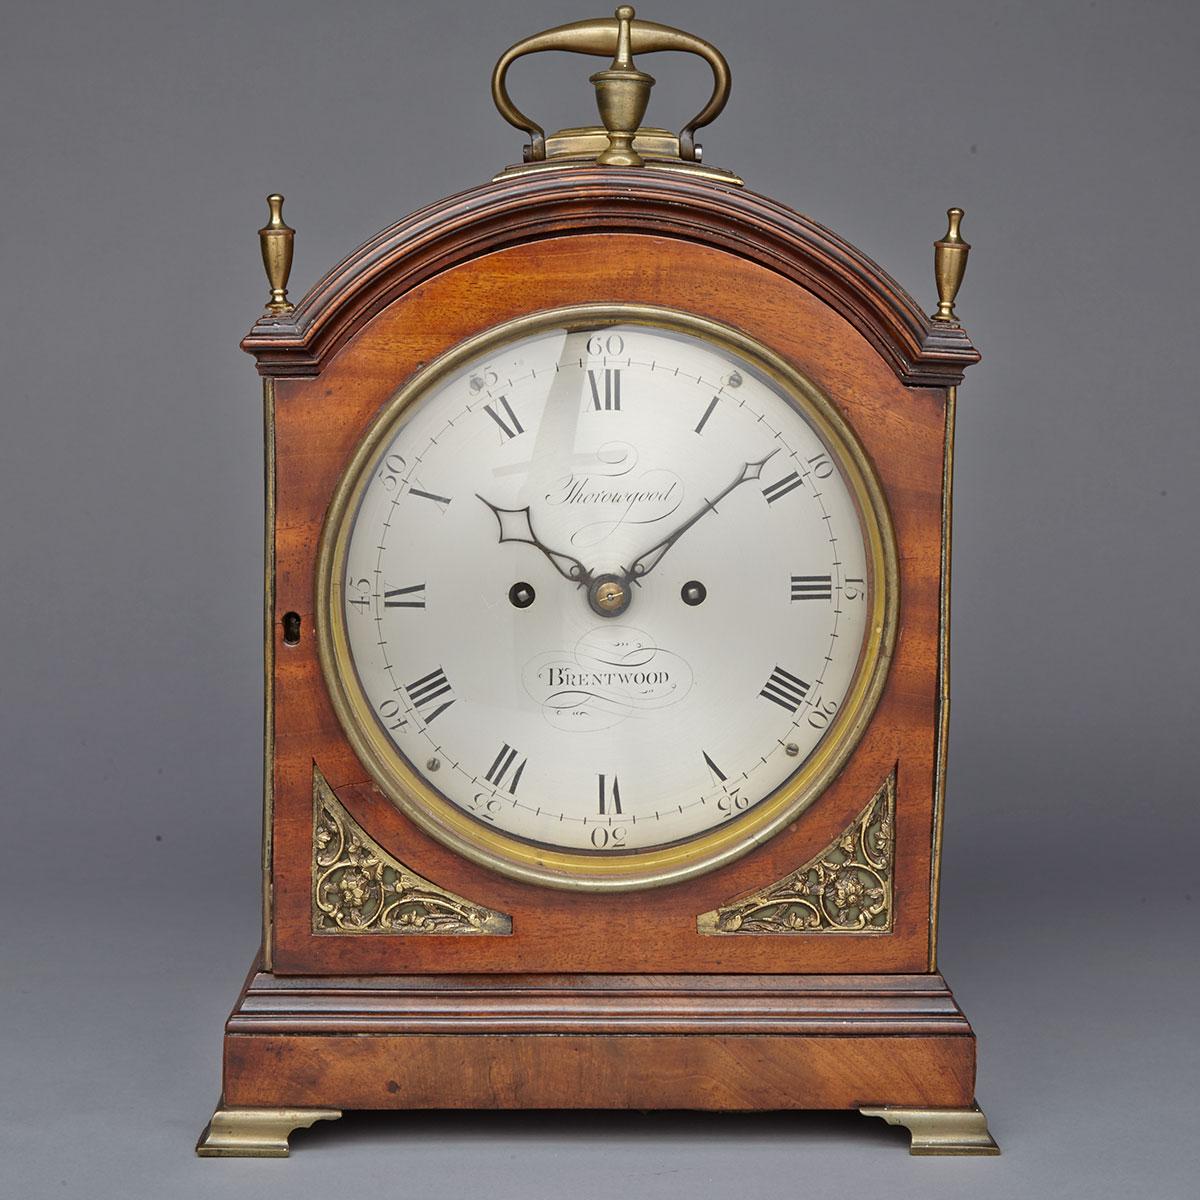 George III Mahogany Repeating Bracket Clock, Thorougood, Brentwood, c.1780